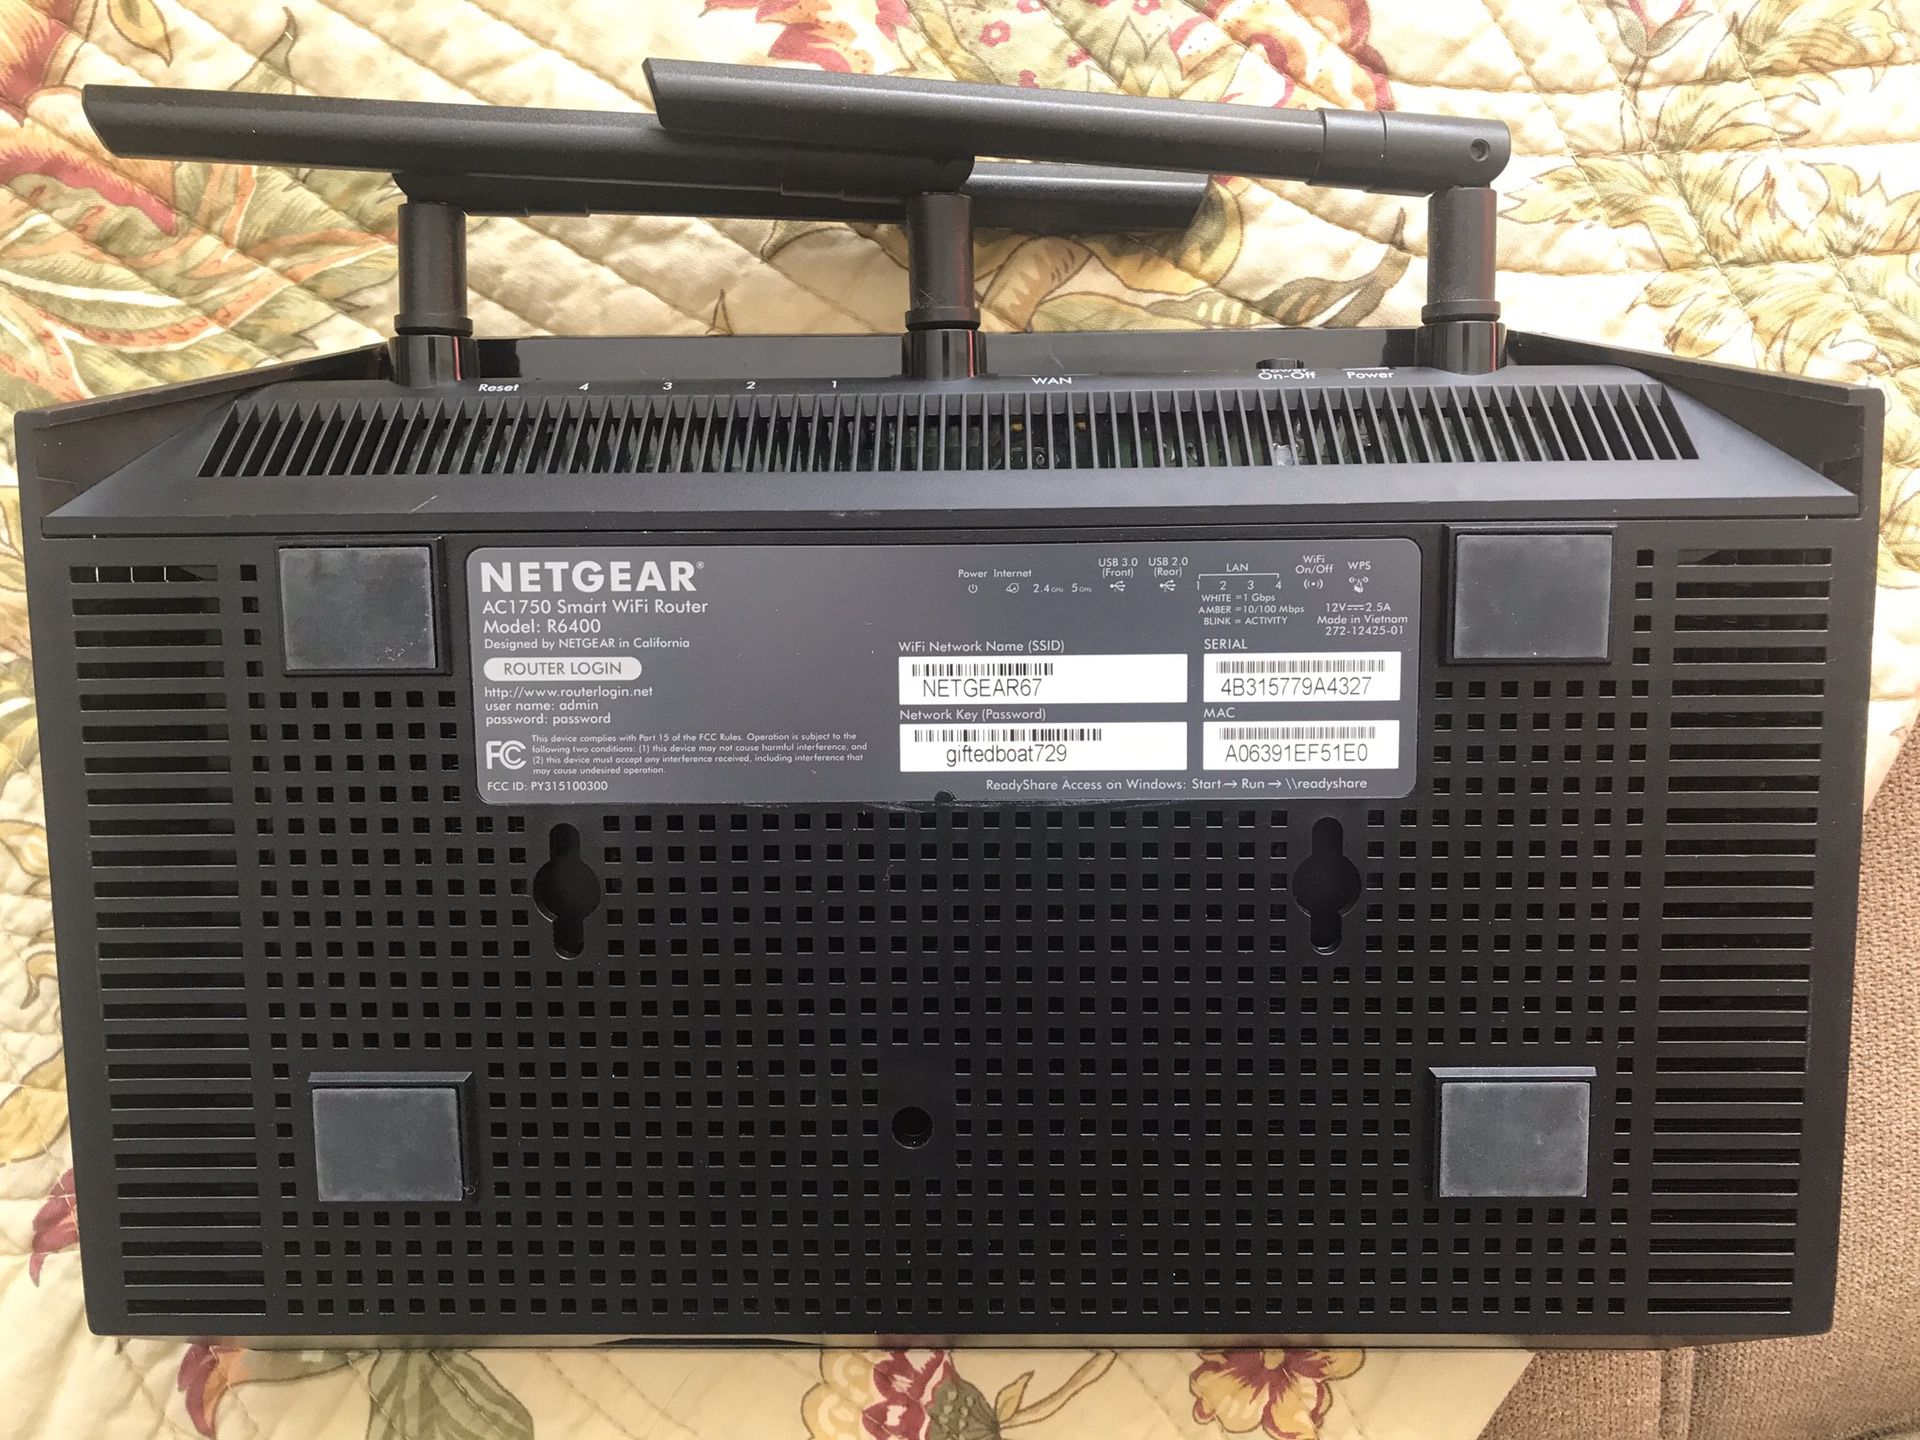 NETGEAR AC1750 Smart Dual Band WiFi Router (R6400v2)